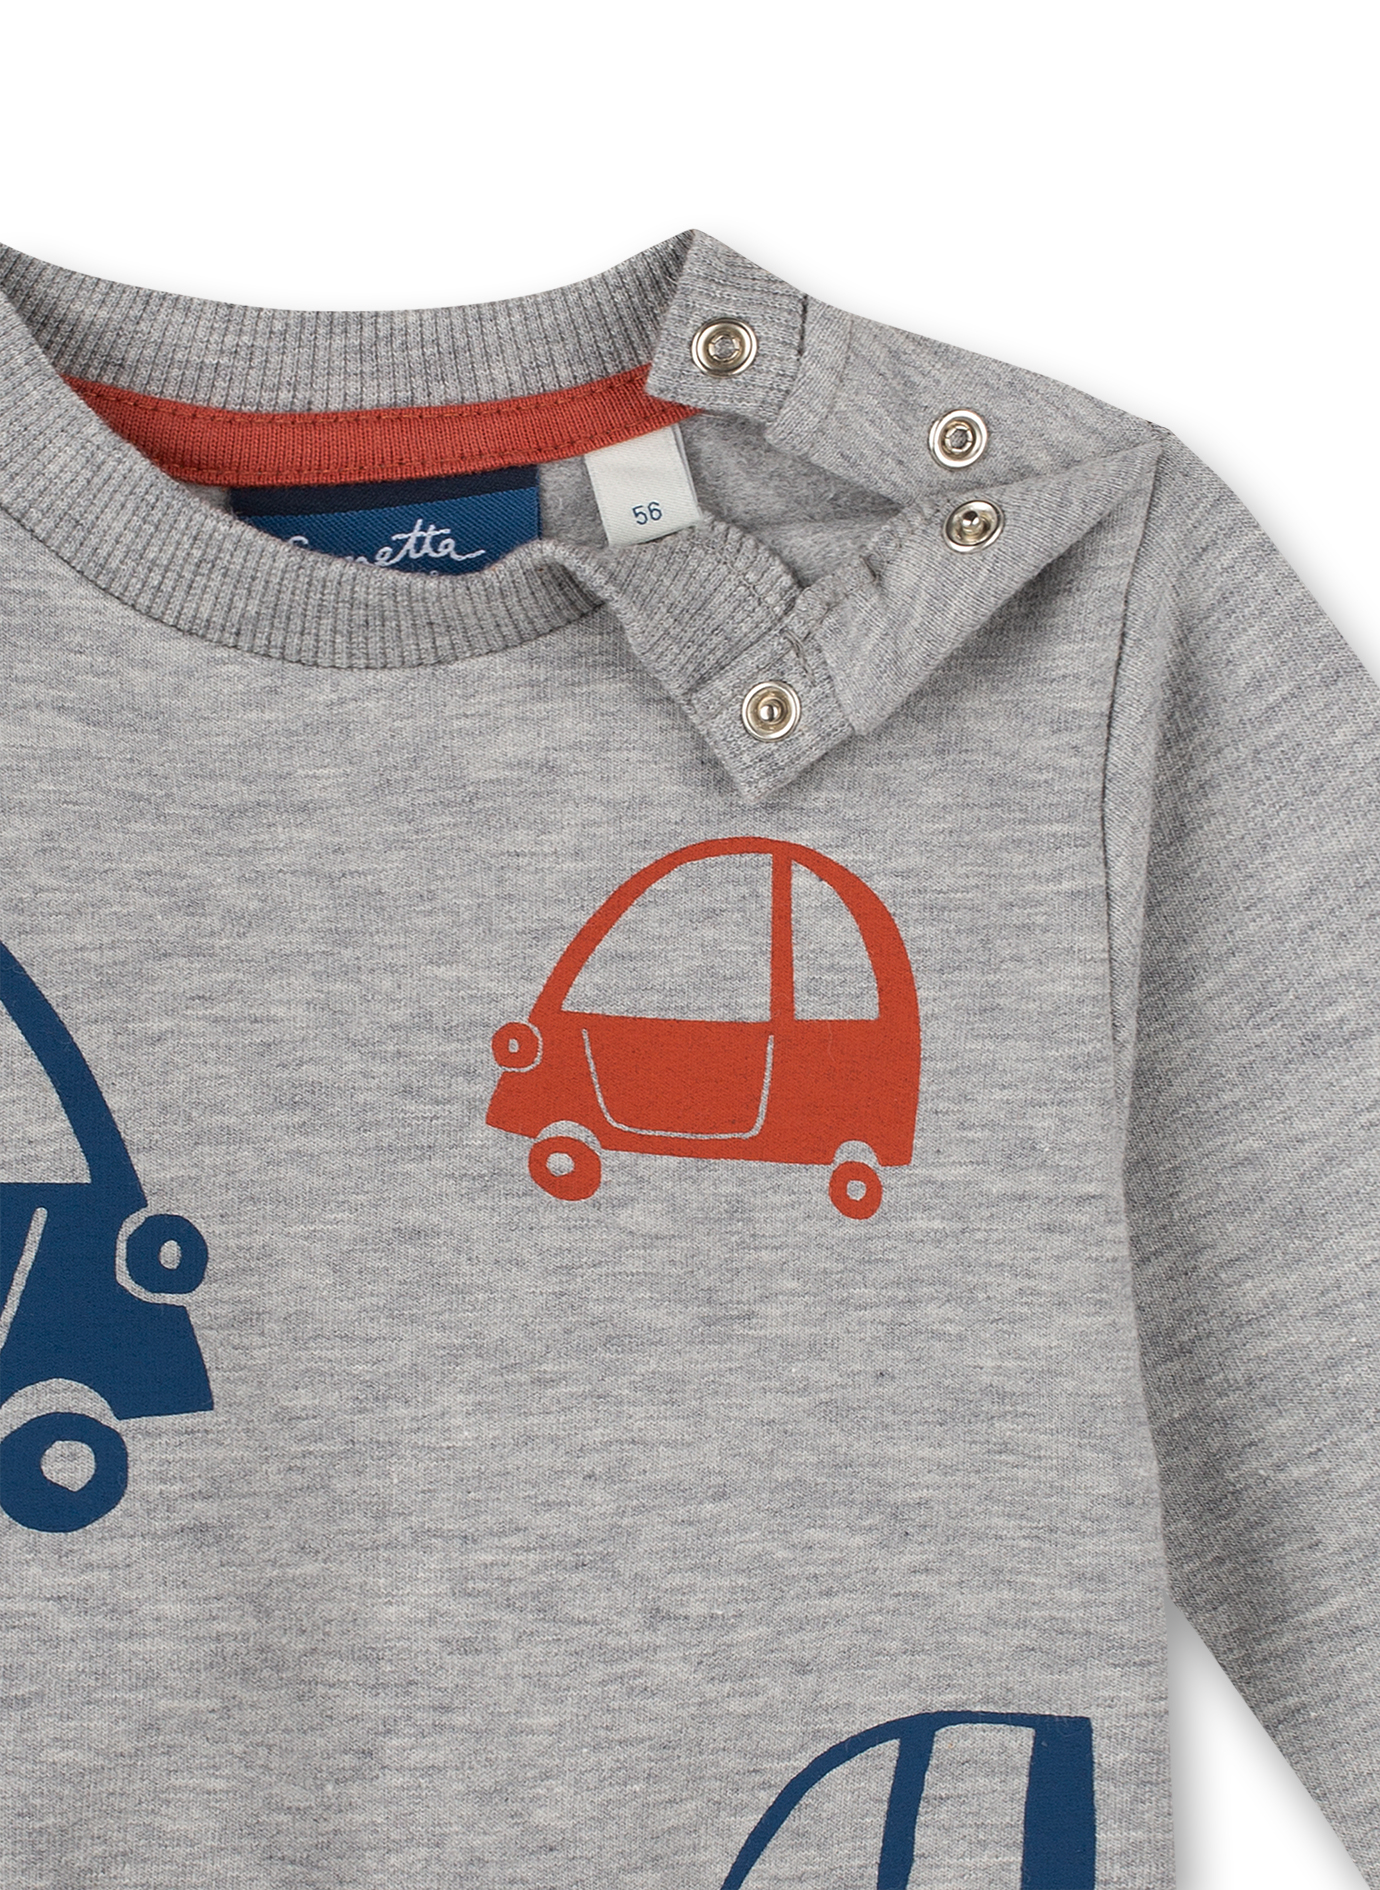 Jungen-Sweatshirt Graumelange Little Car